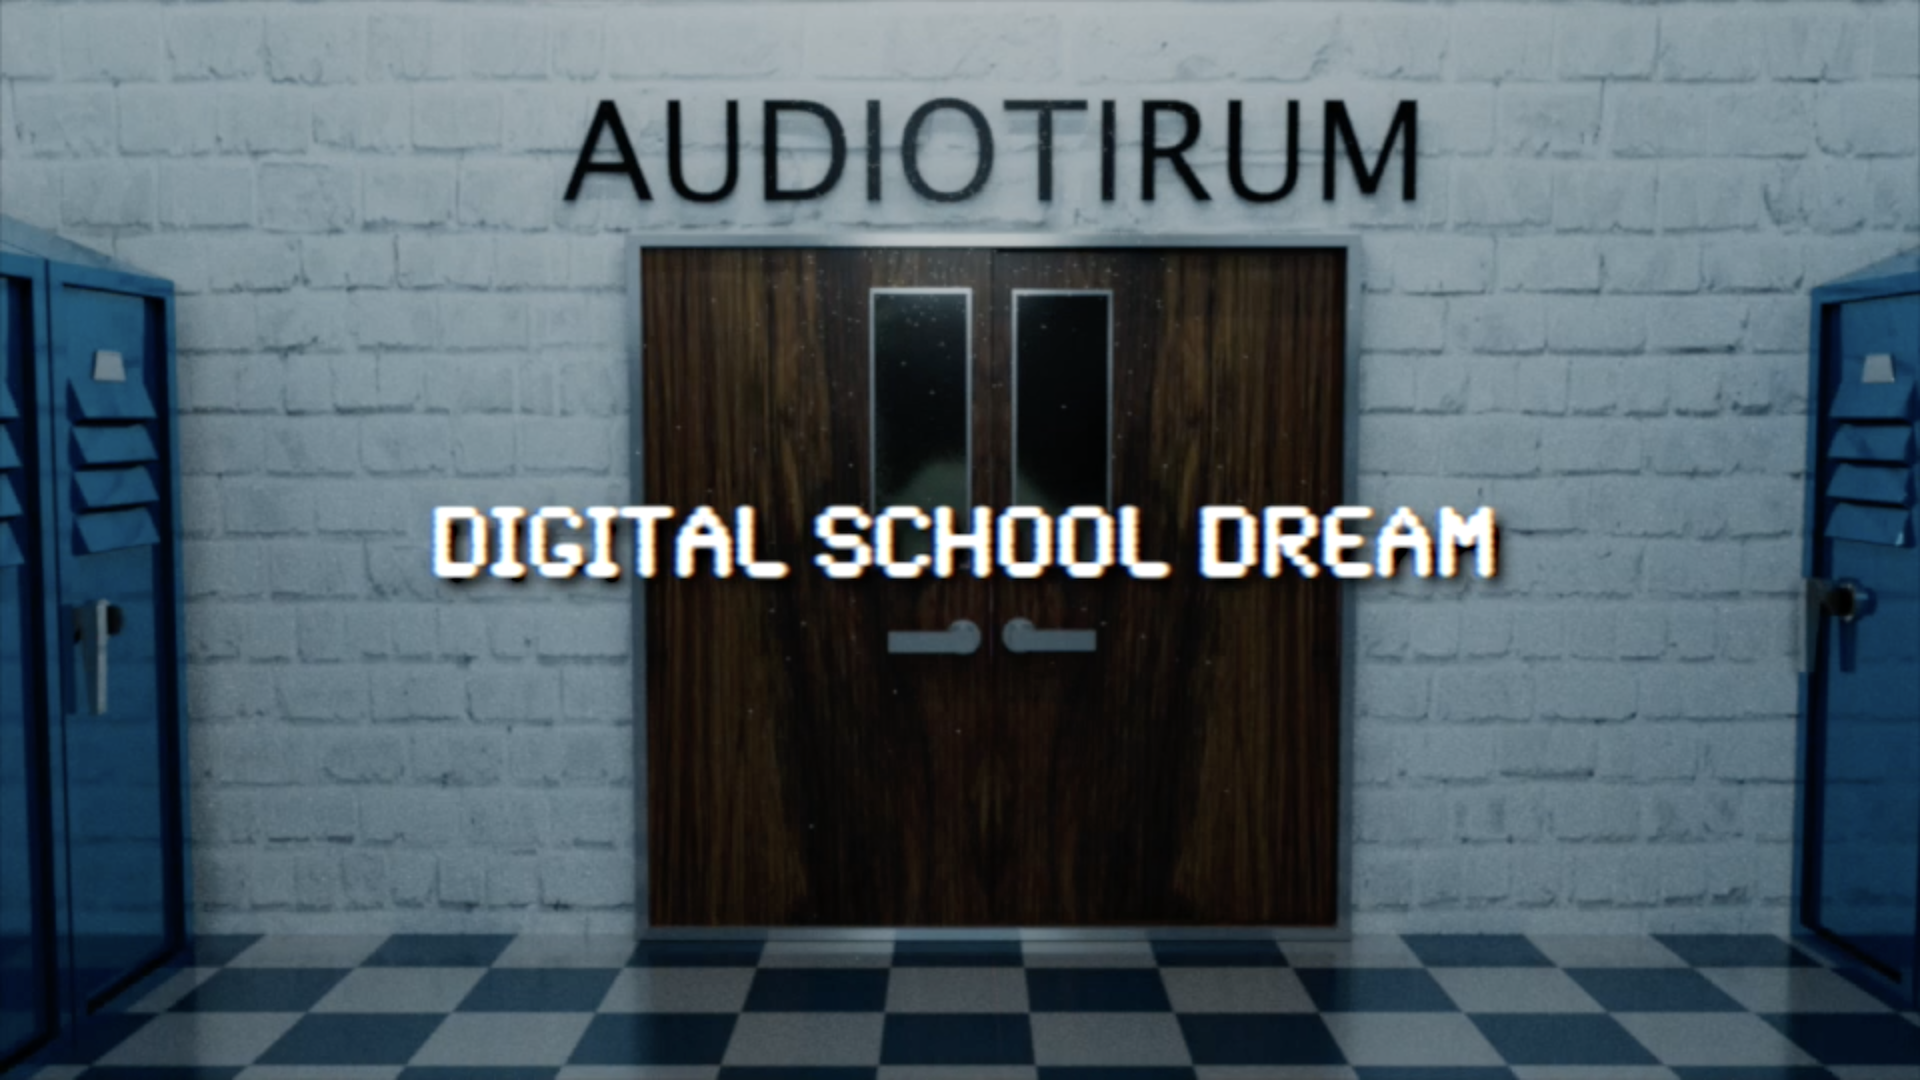 DIGITAL SCHOOL DREAM